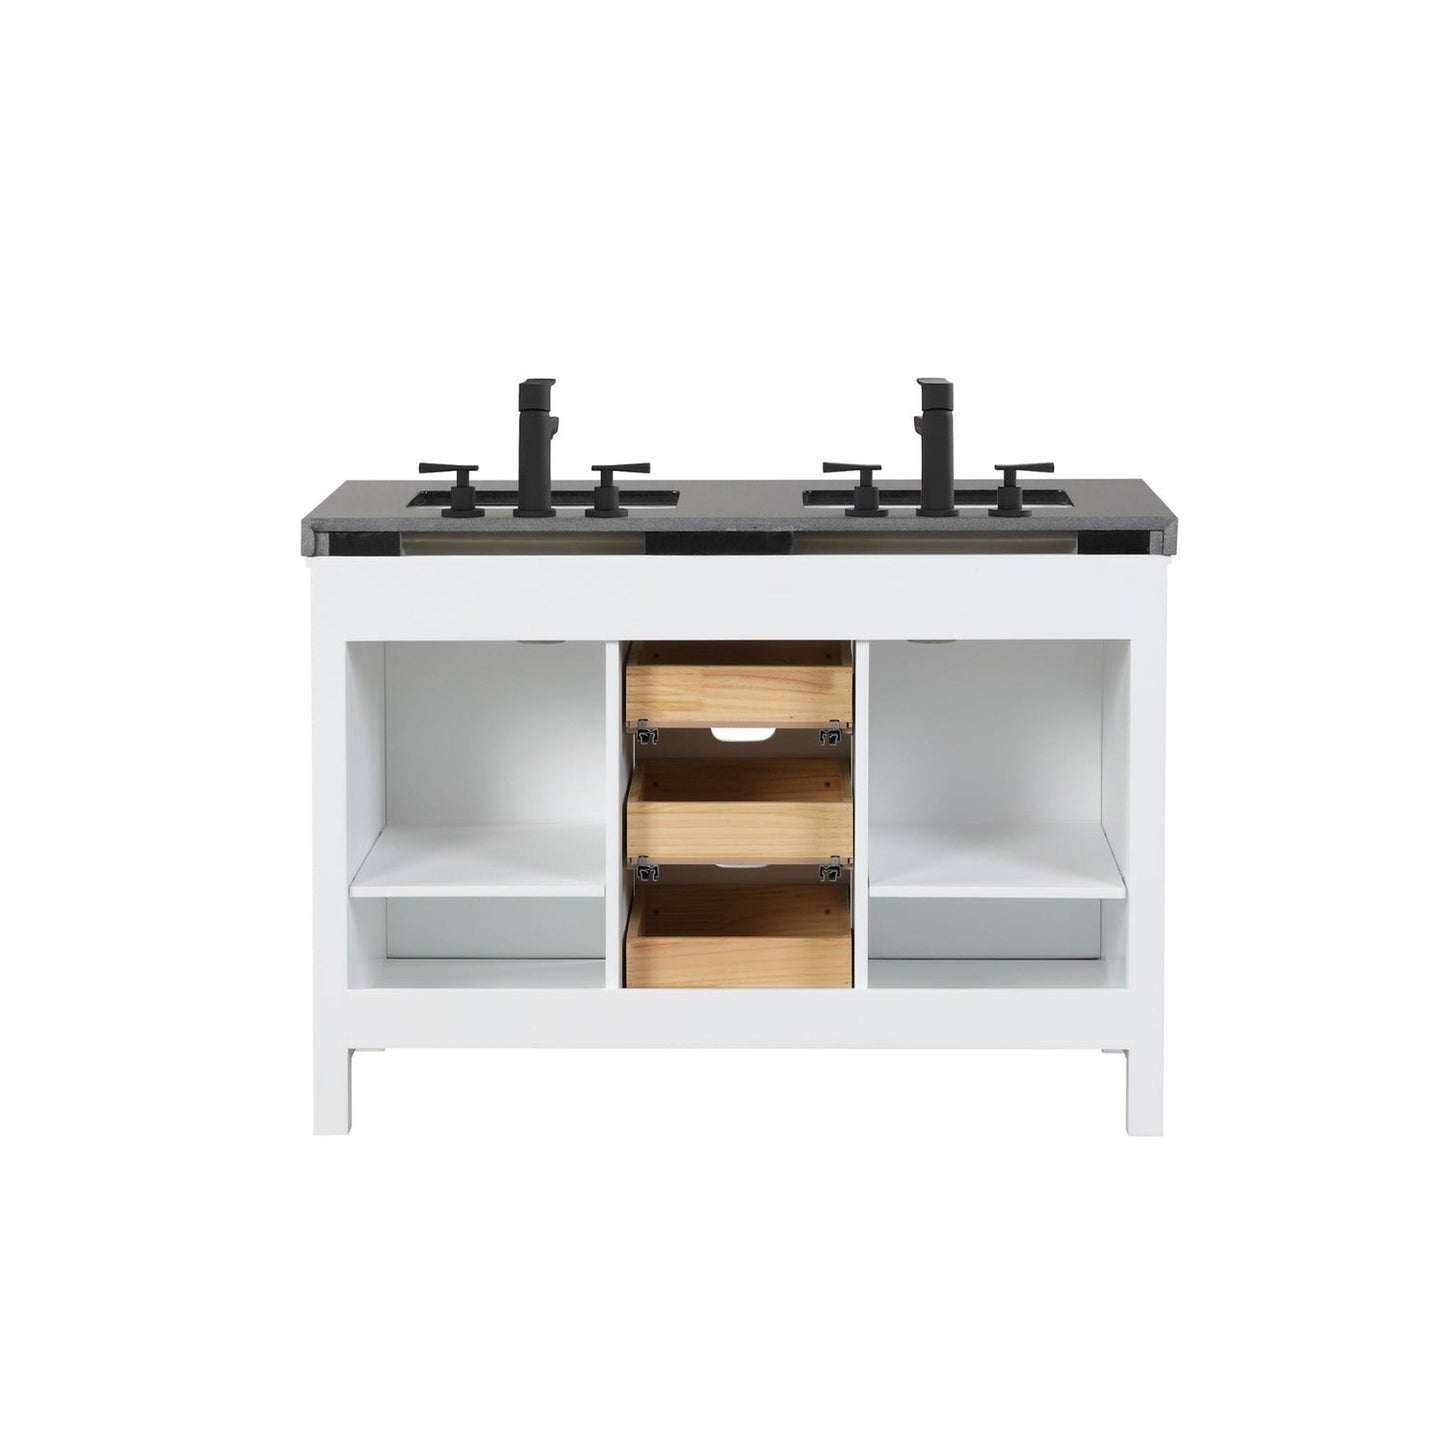 Eviva Dallas 48” x 34” White Freestanding Bathroom Vanity With Black Granite Countertop and Double Undermount Sink